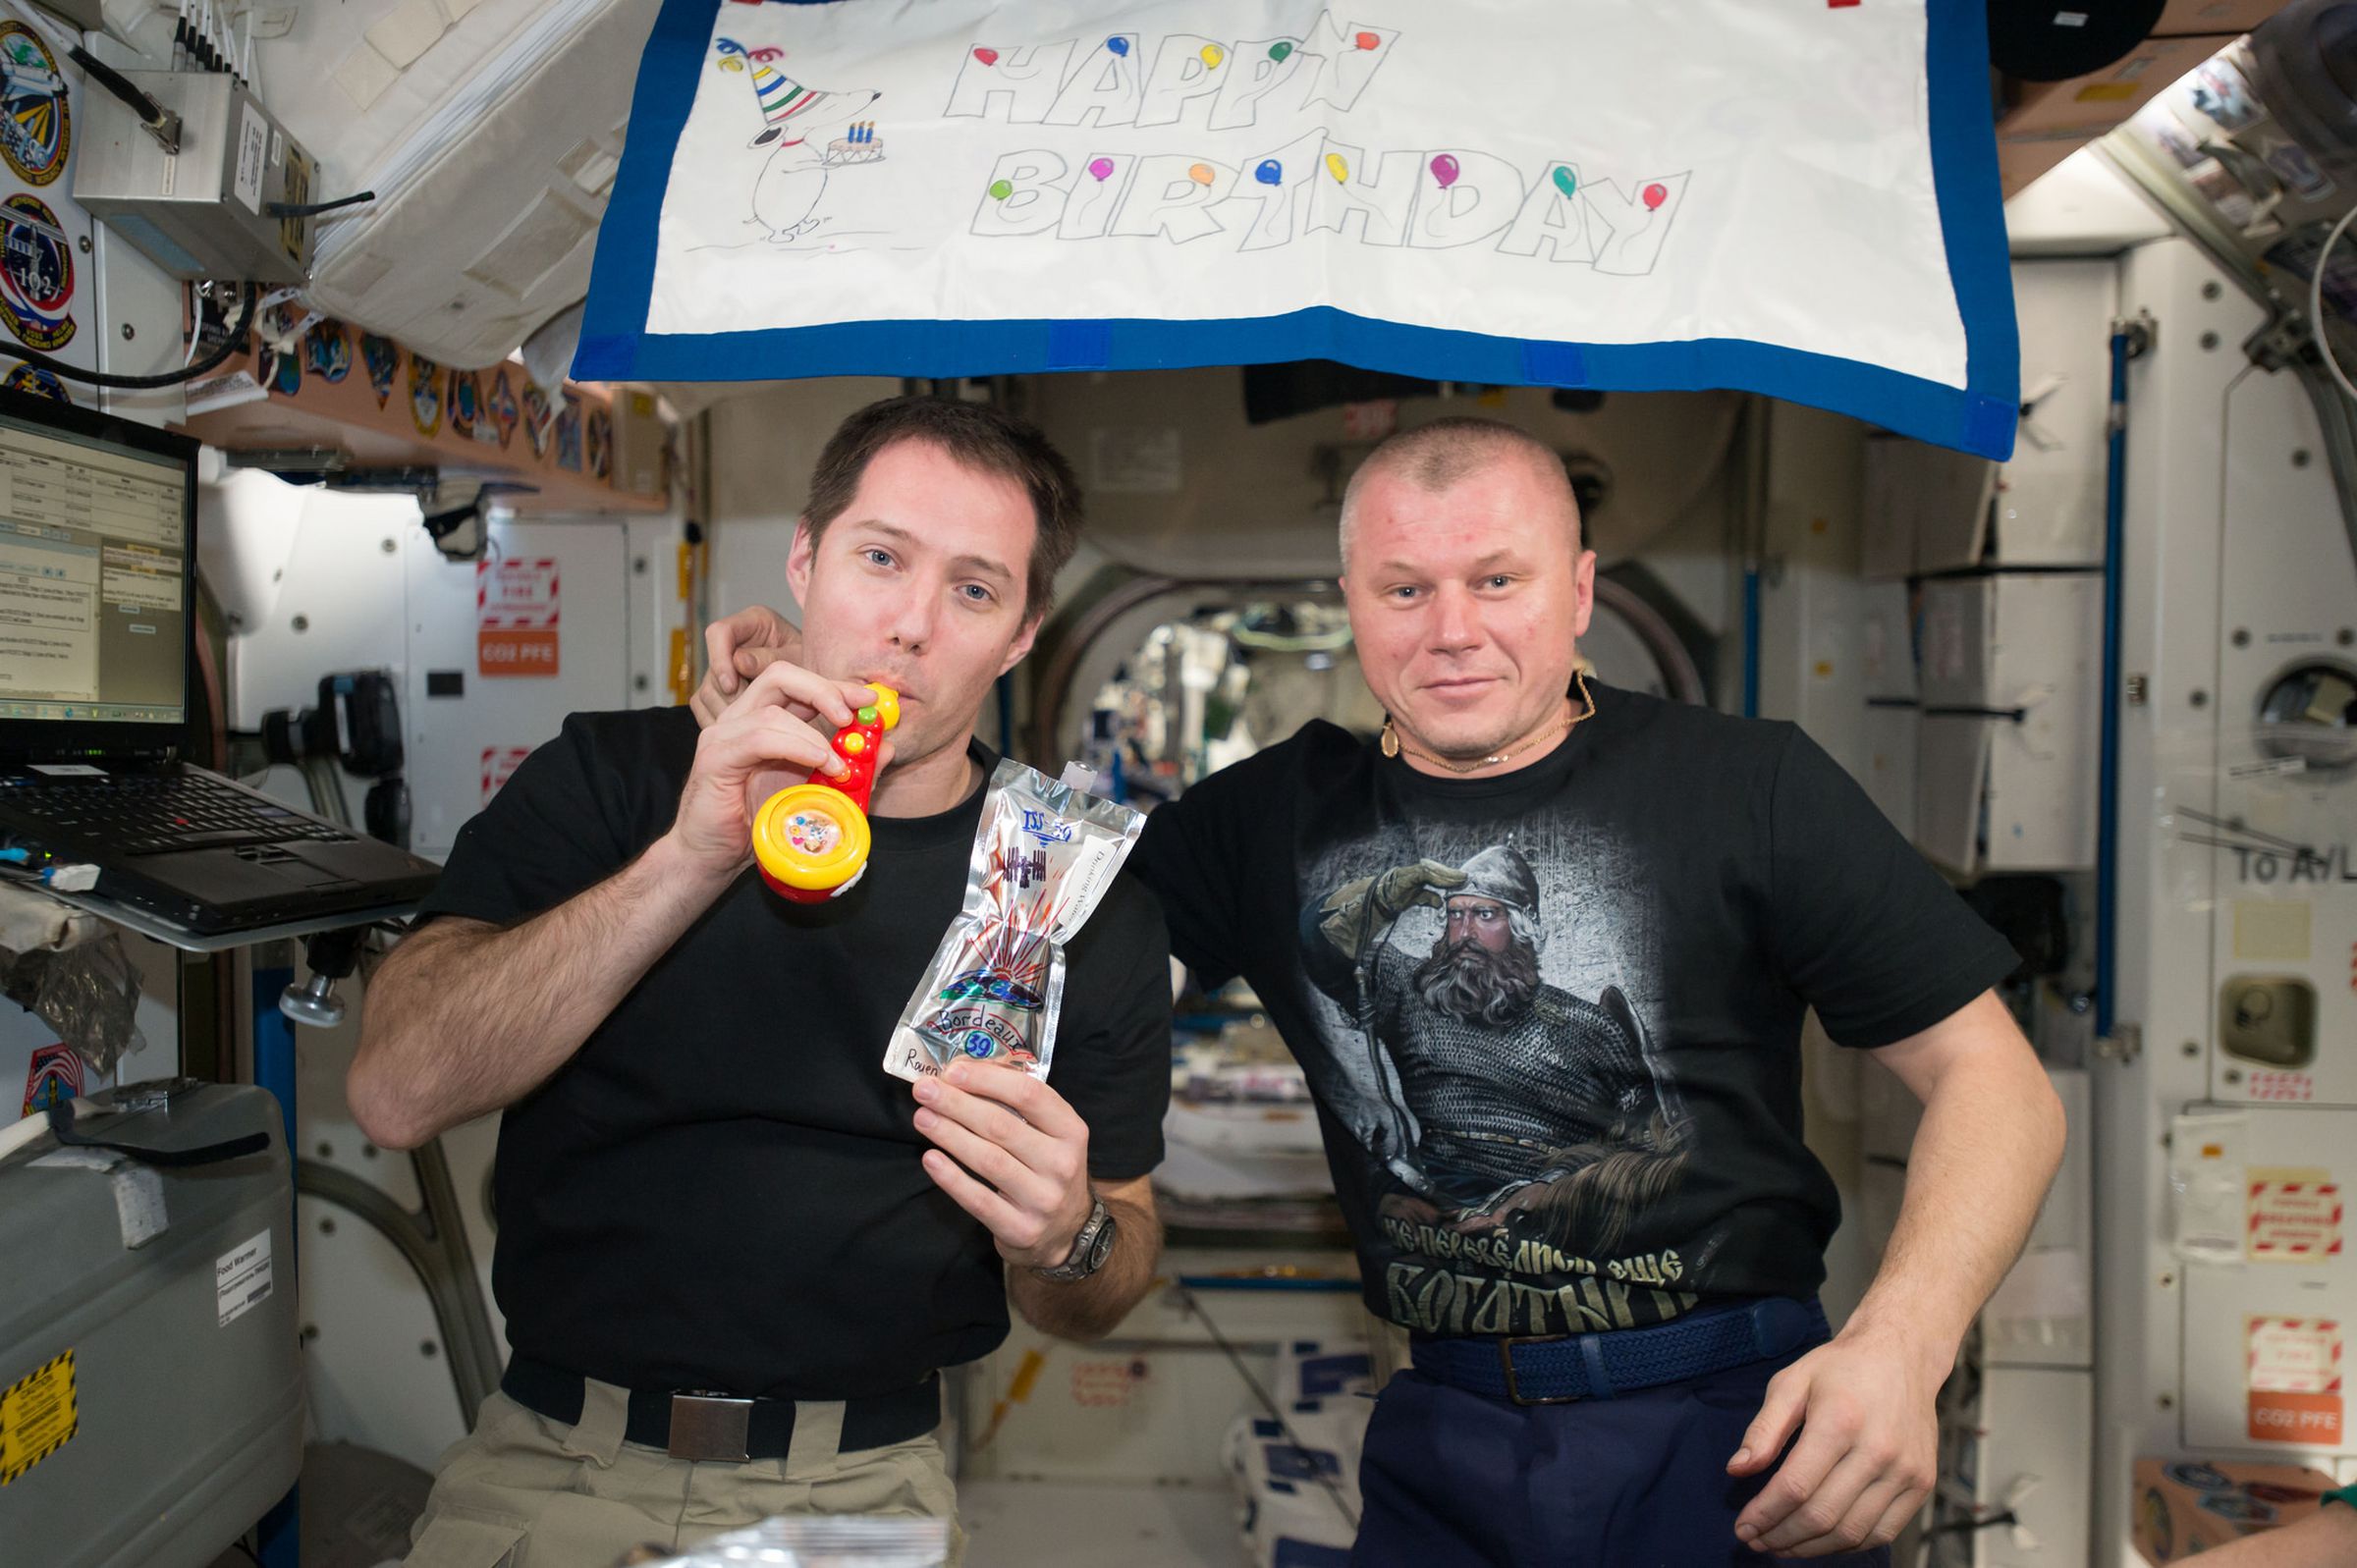 Thomas Pesquet of the ESA and Oleg Novitskiy of Roscosmos celebrate Pesquet's birthday aboard the International Space Station.